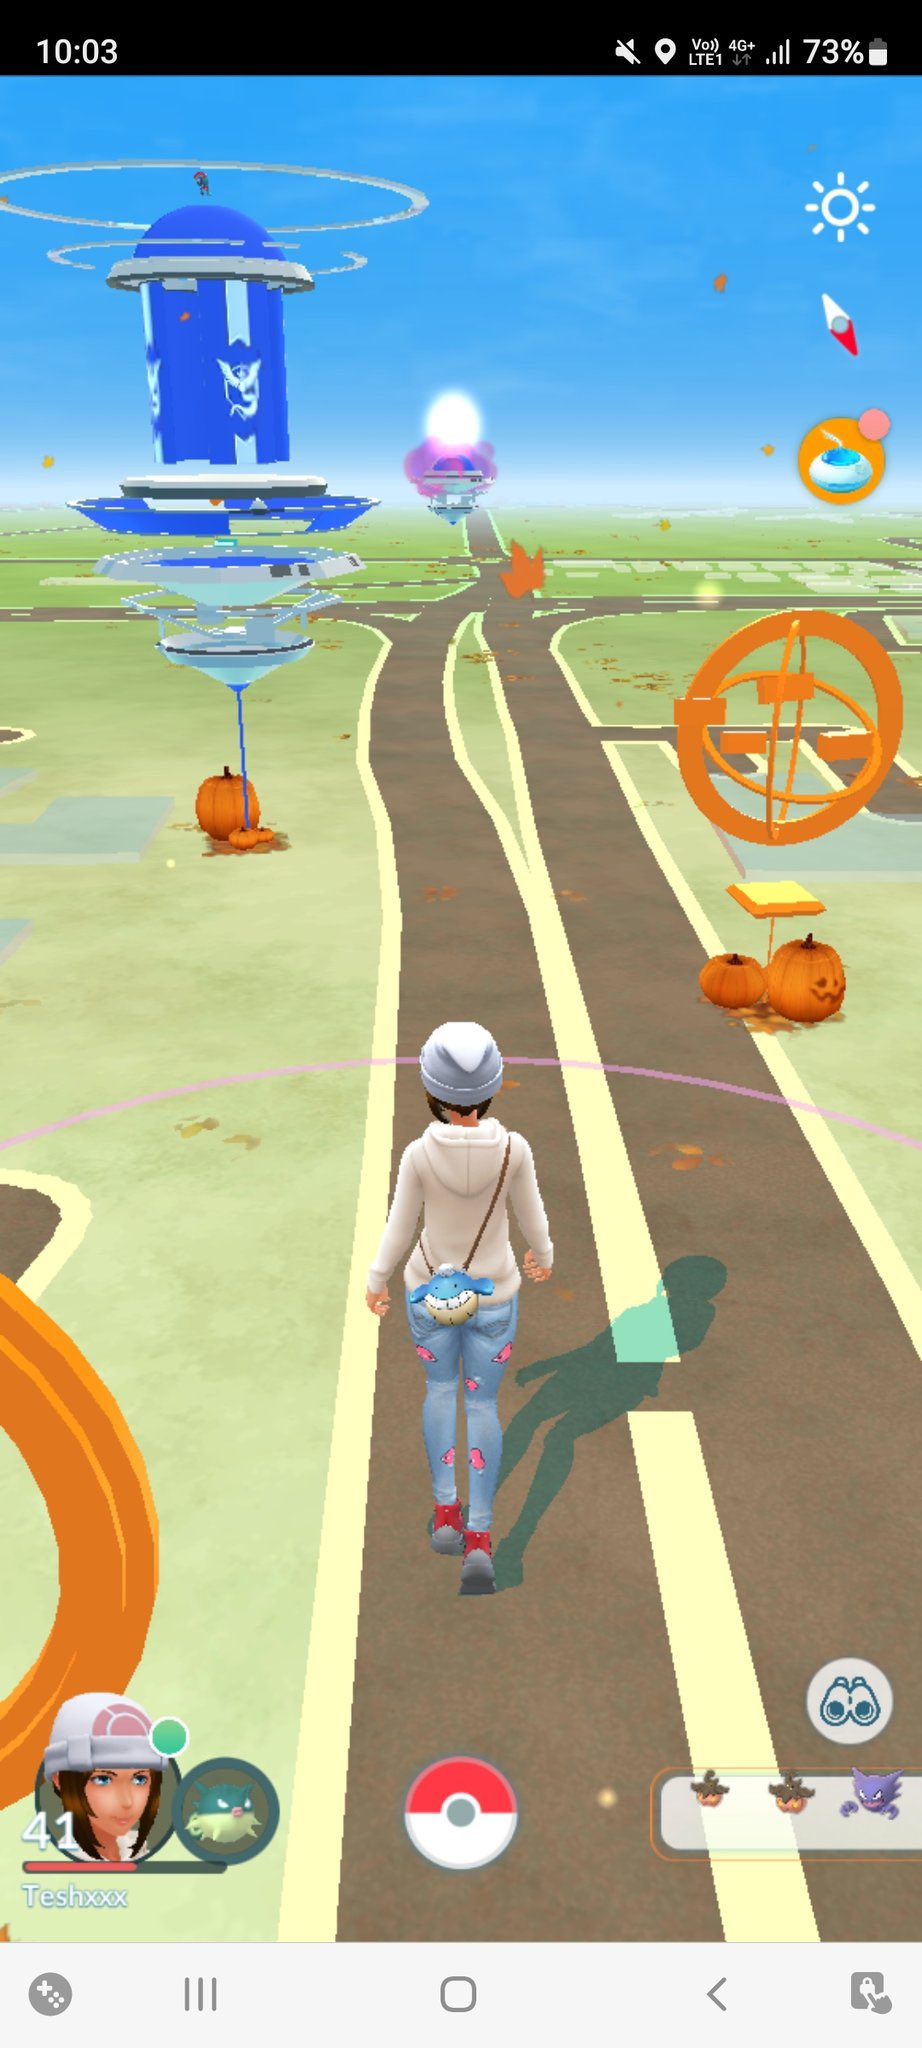 MYSTIC7 on X: New Pokémon GO Halloween map update looks incredible 🎃   / X